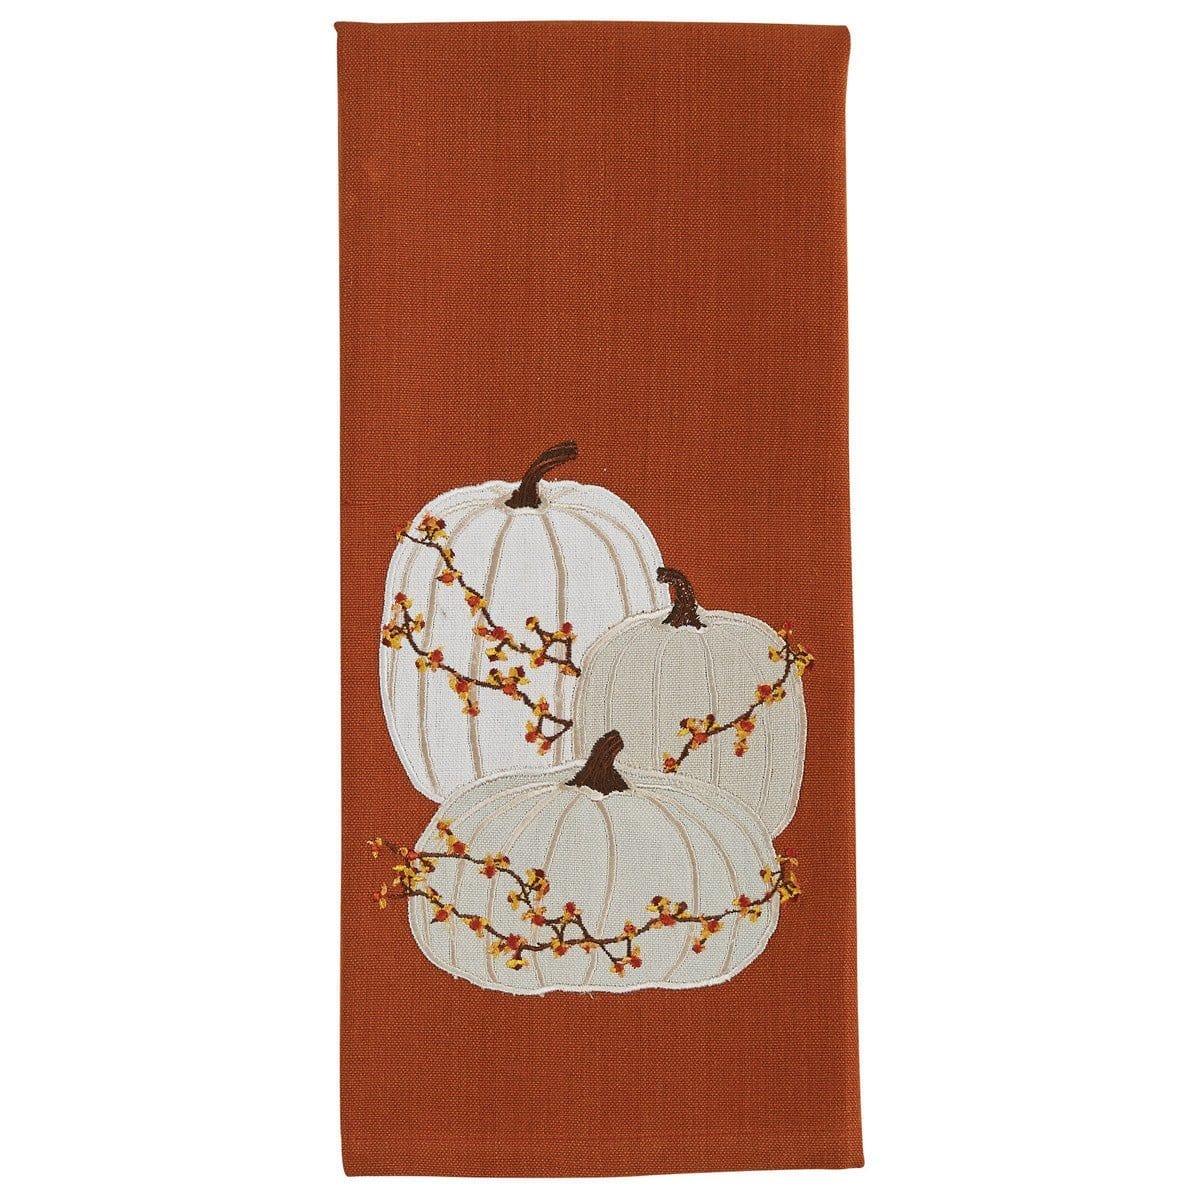 Appliqued &amp; Embroidered Cream Pumpkins Decorative Towel-Park Designs-The Village Merchant